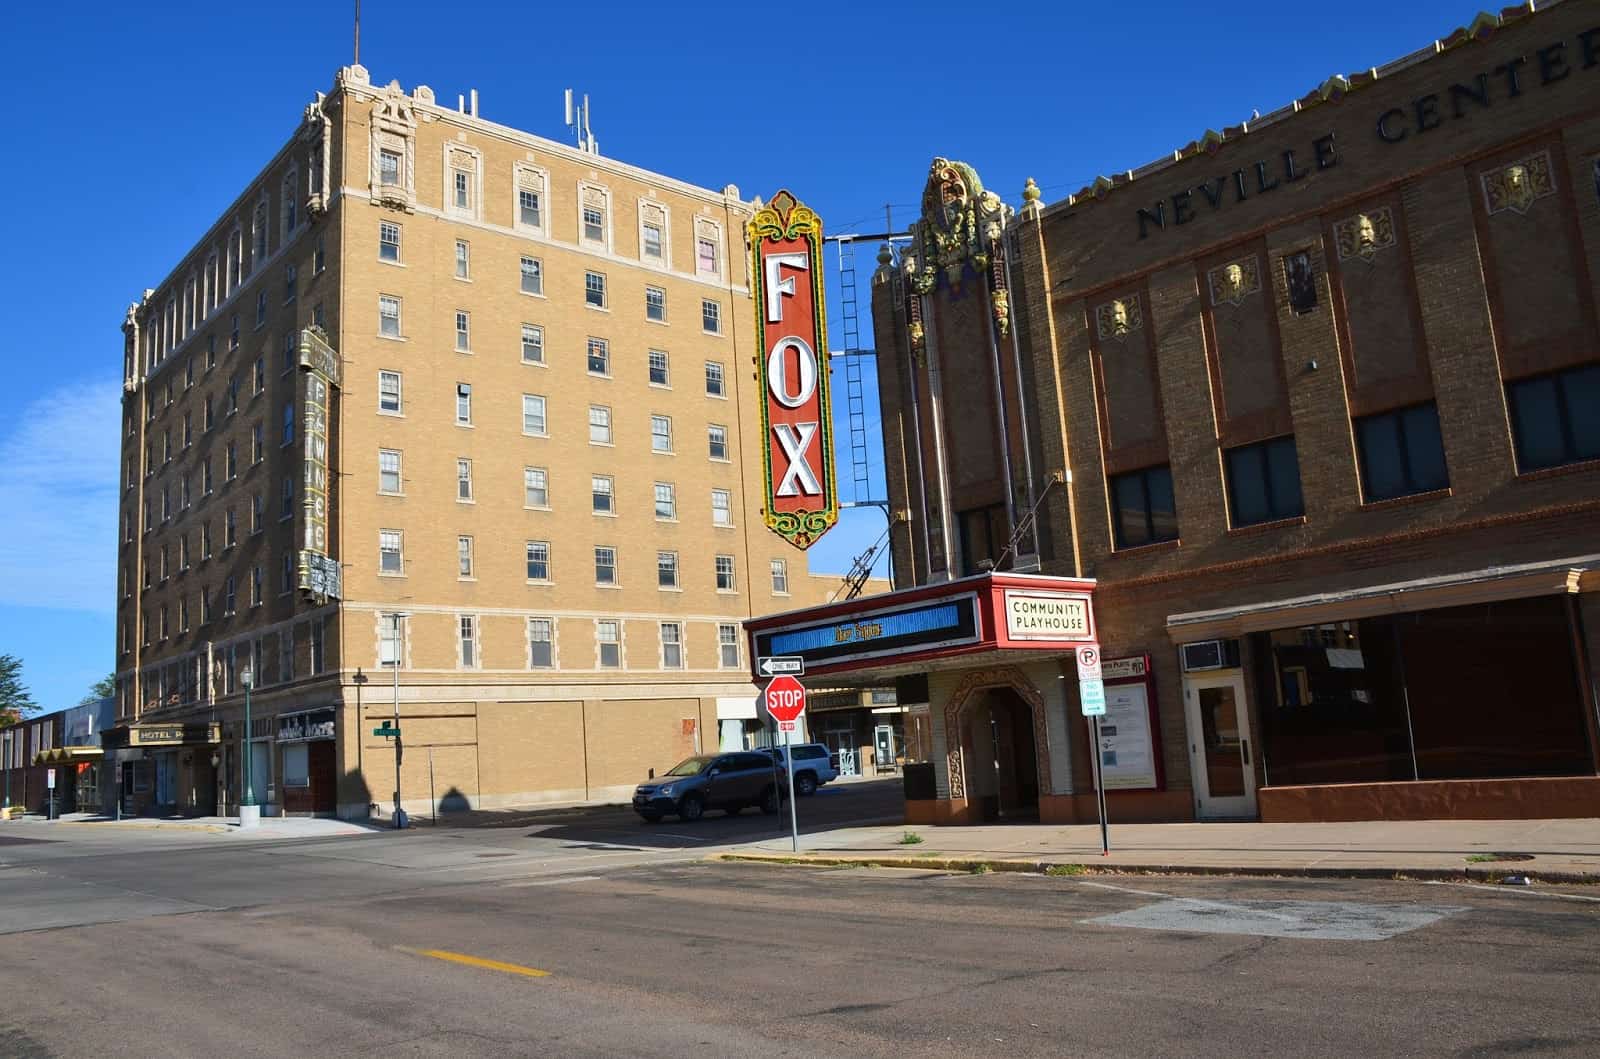 Pawnee Hotel (left) and Fox Theatre (right) in North Platte, Nebraska